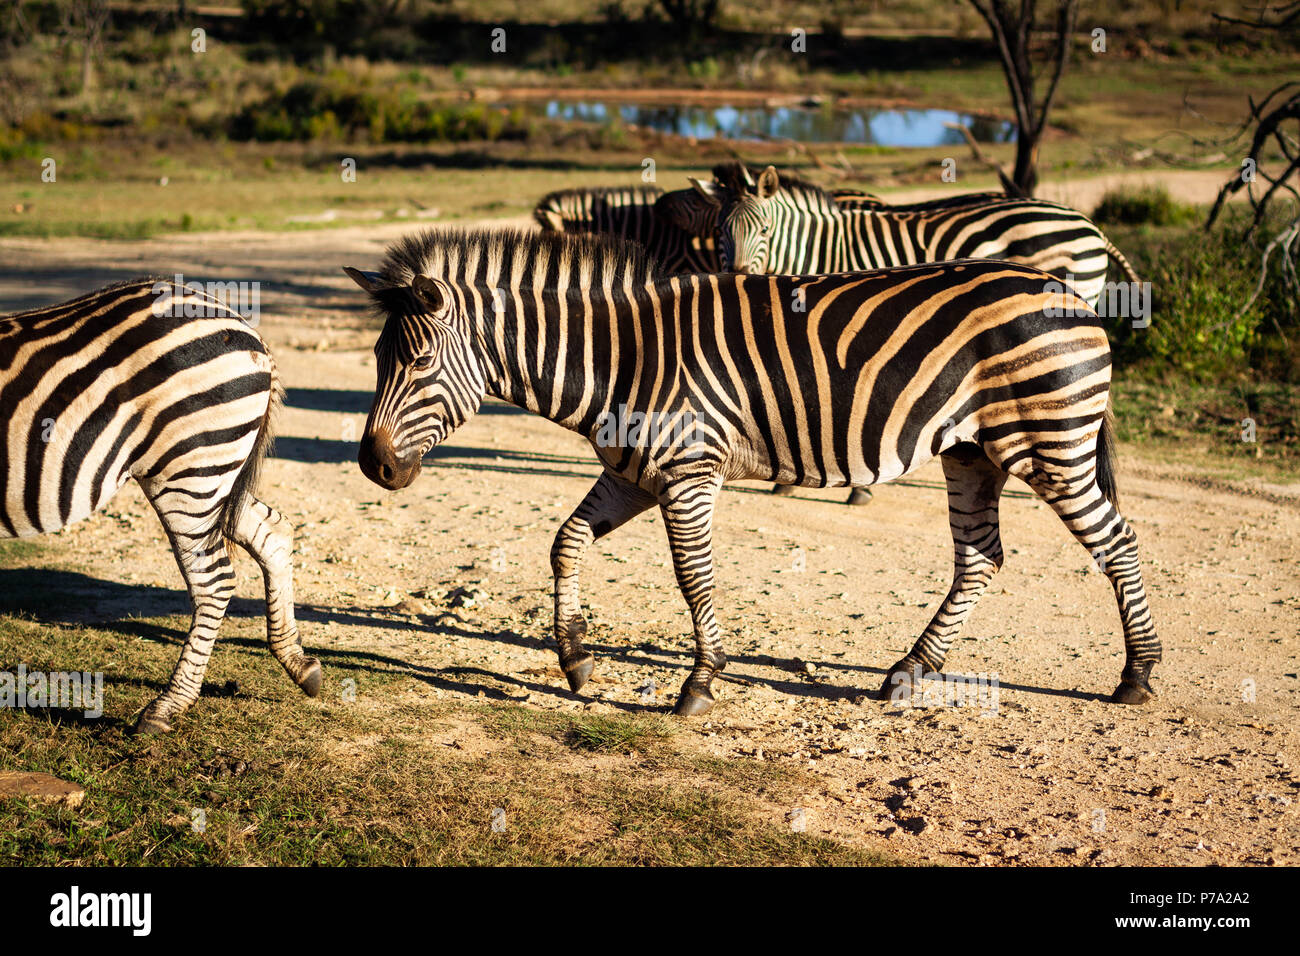 Zebrastreifen ein Feldweg in einem Naturschutzgebiet in Hartbeespoort, Südafrika. Stockfoto